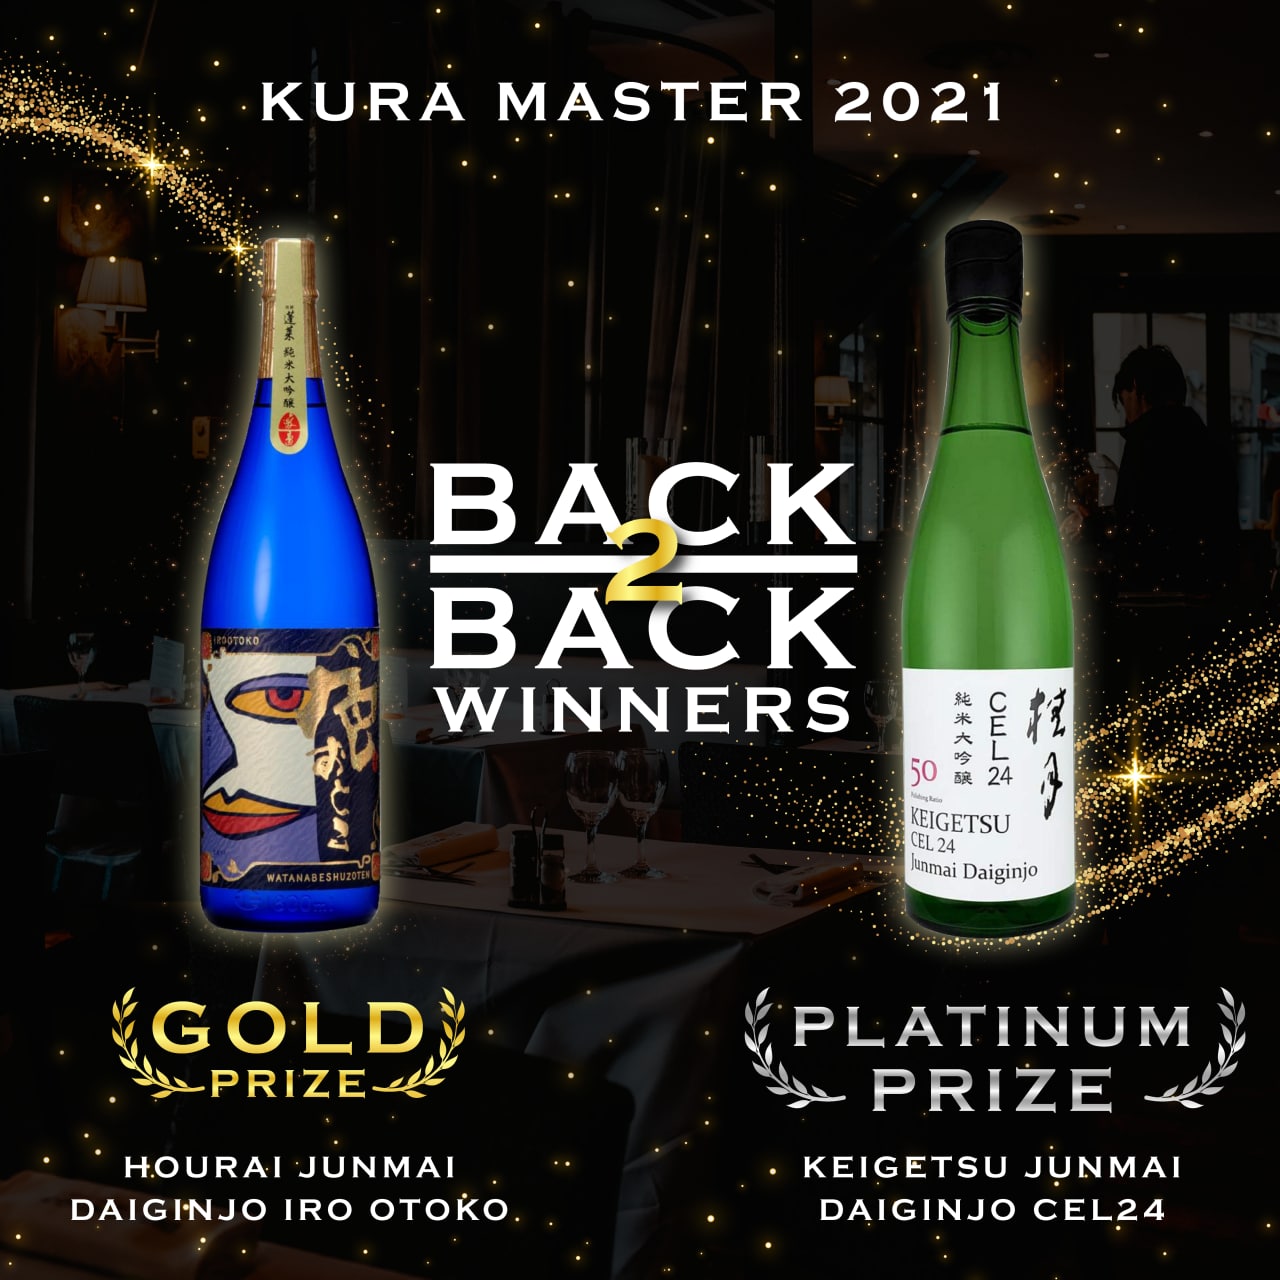 Kuramaster 2021 Award Winners